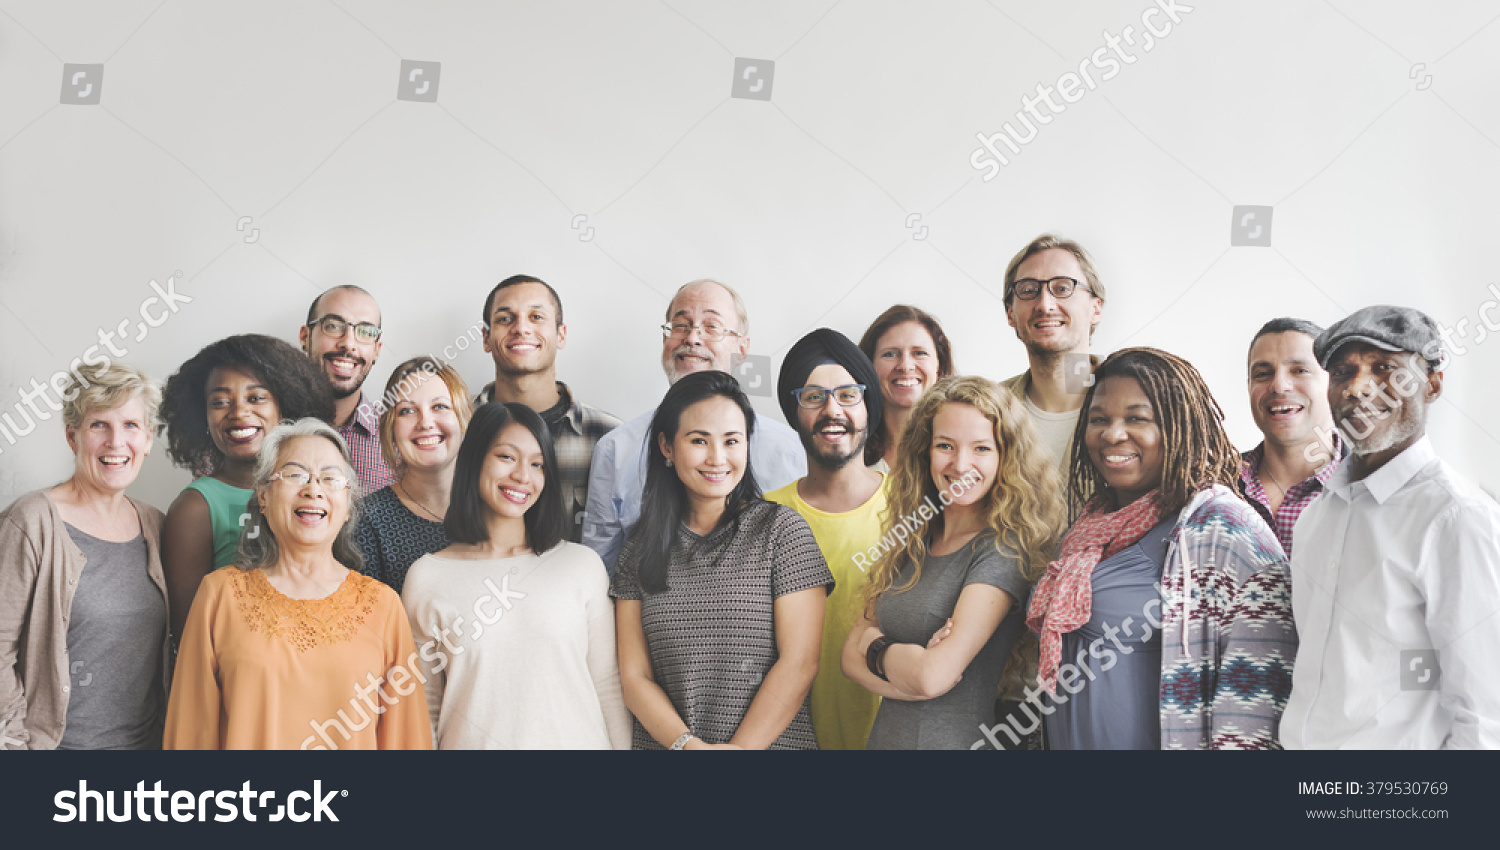 Diversity People Group Team Union Concept #379530769